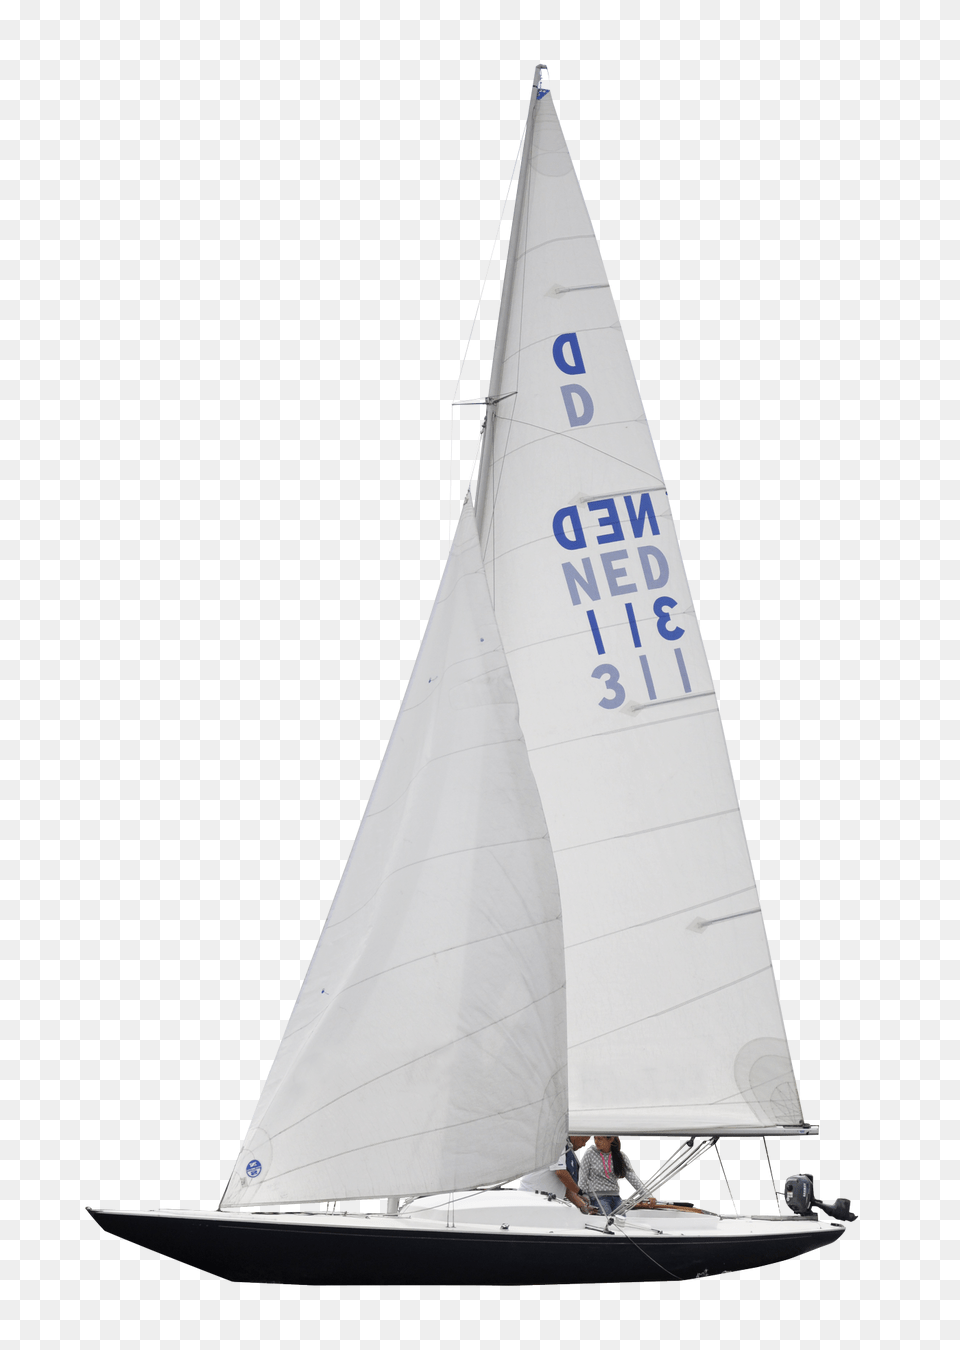 Pngpix Com Sailboat Image, Boat, Transportation, Vehicle, Person Free Png Download